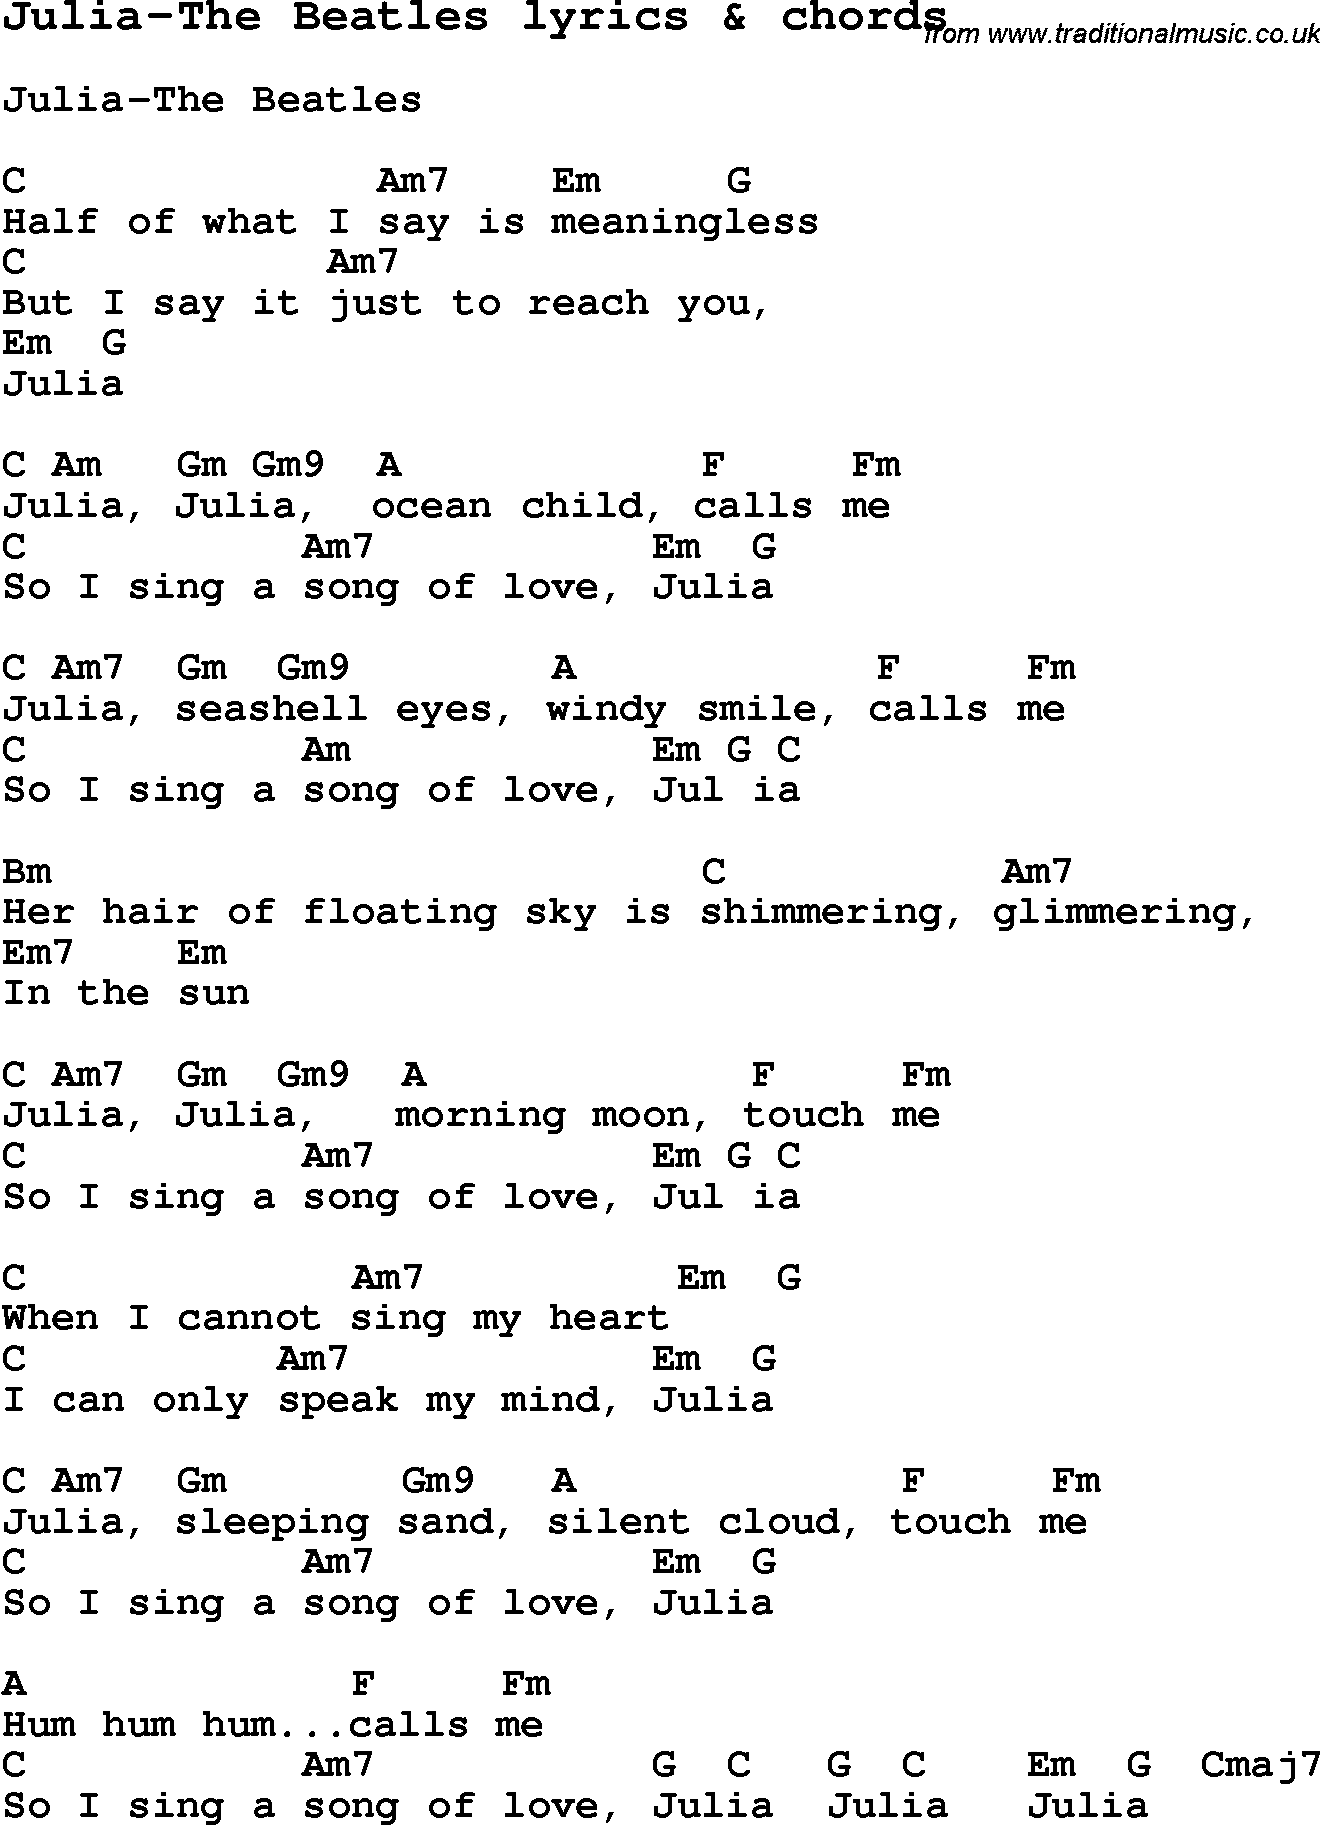 Love Song Lyrics for: Julia-The Beatles with chords for Ukulele, Guitar Banjo etc.